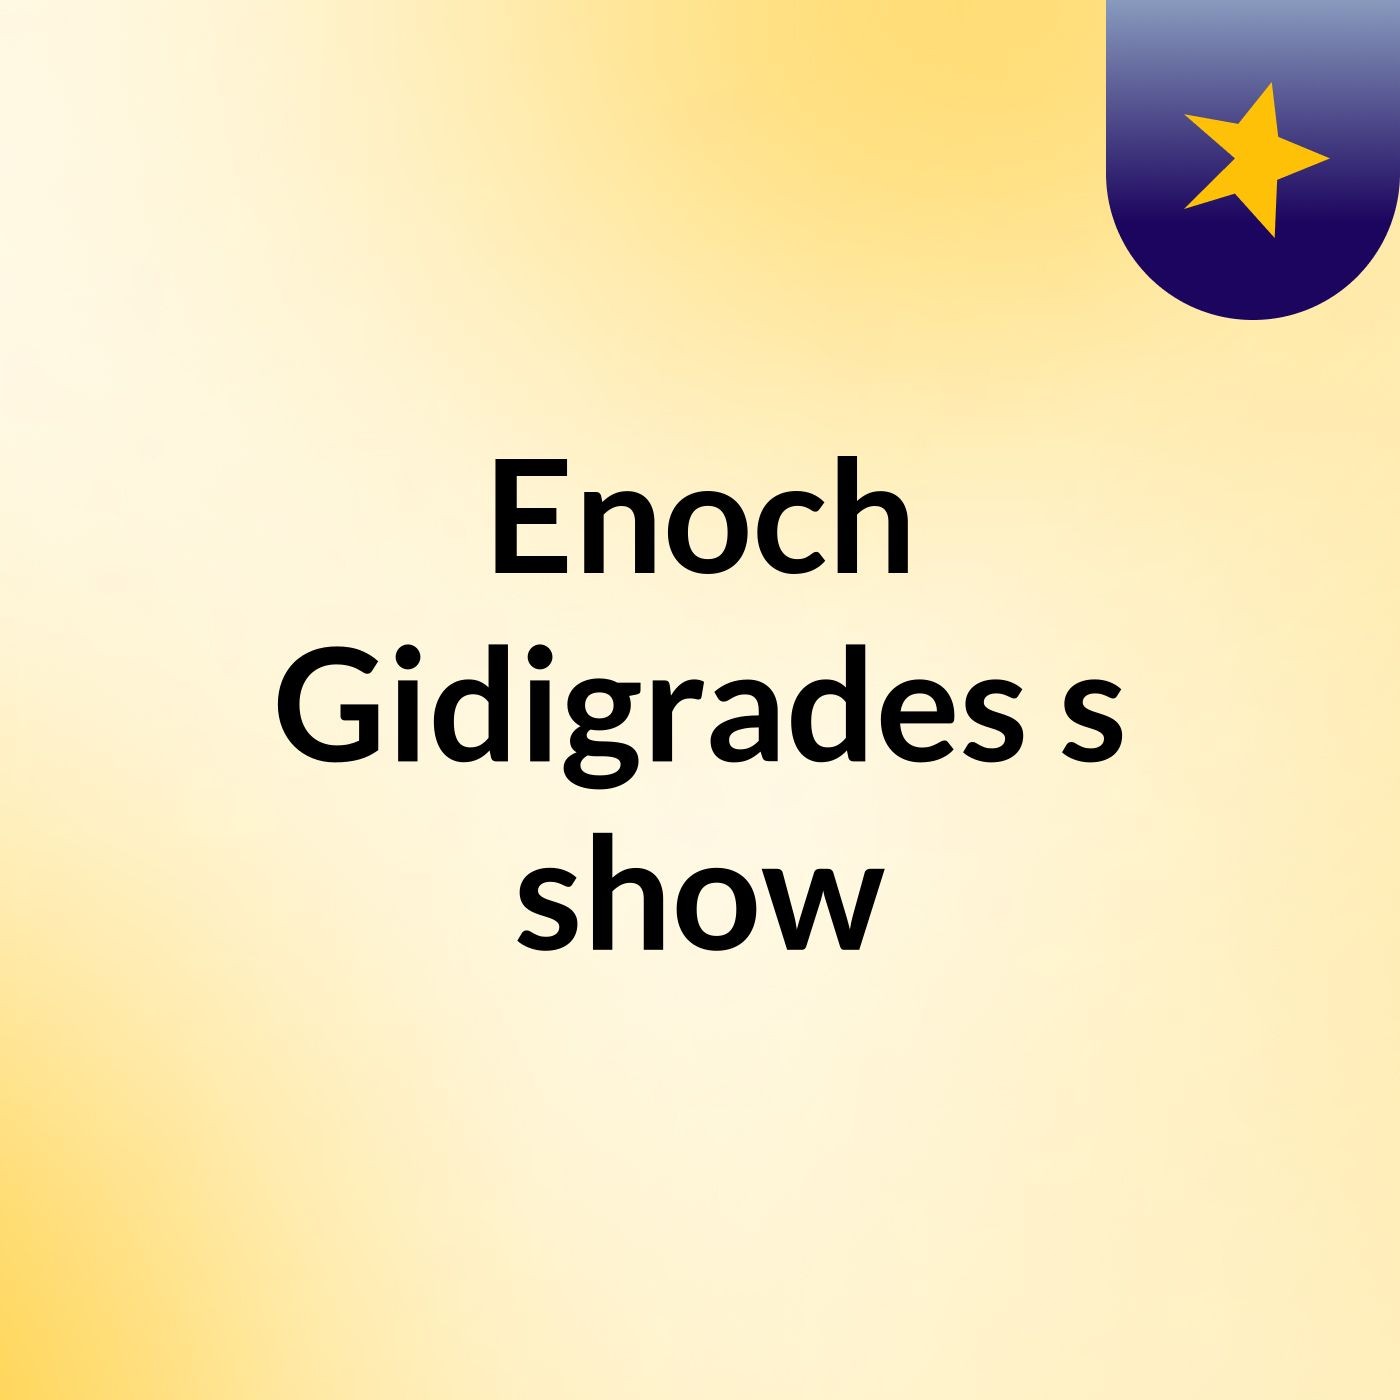 Enoch Gidigrades's show